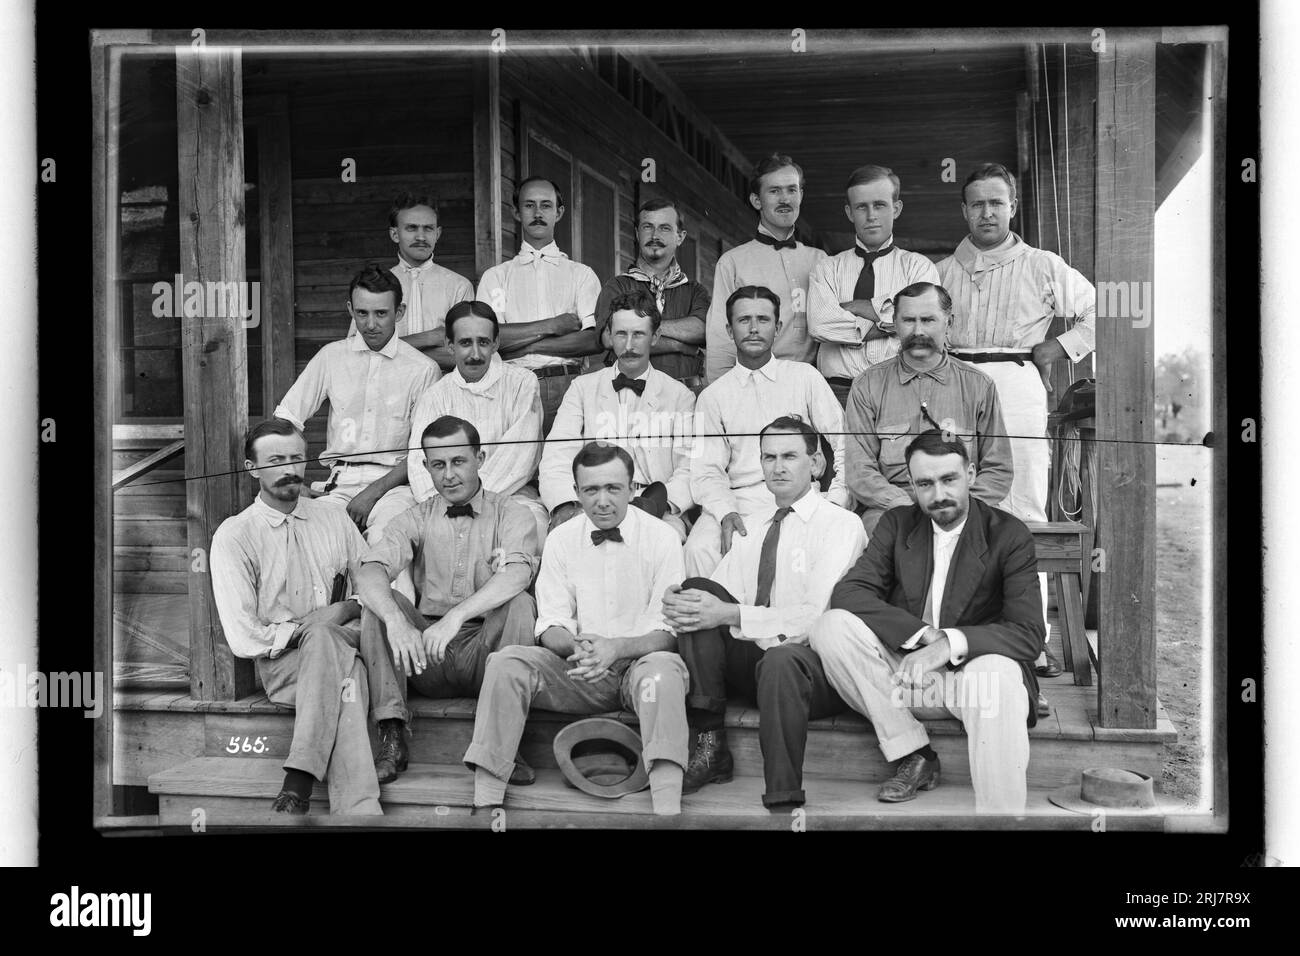 Grupo de Homens - 565 1910 by Dana B. Merrill Stock Photo